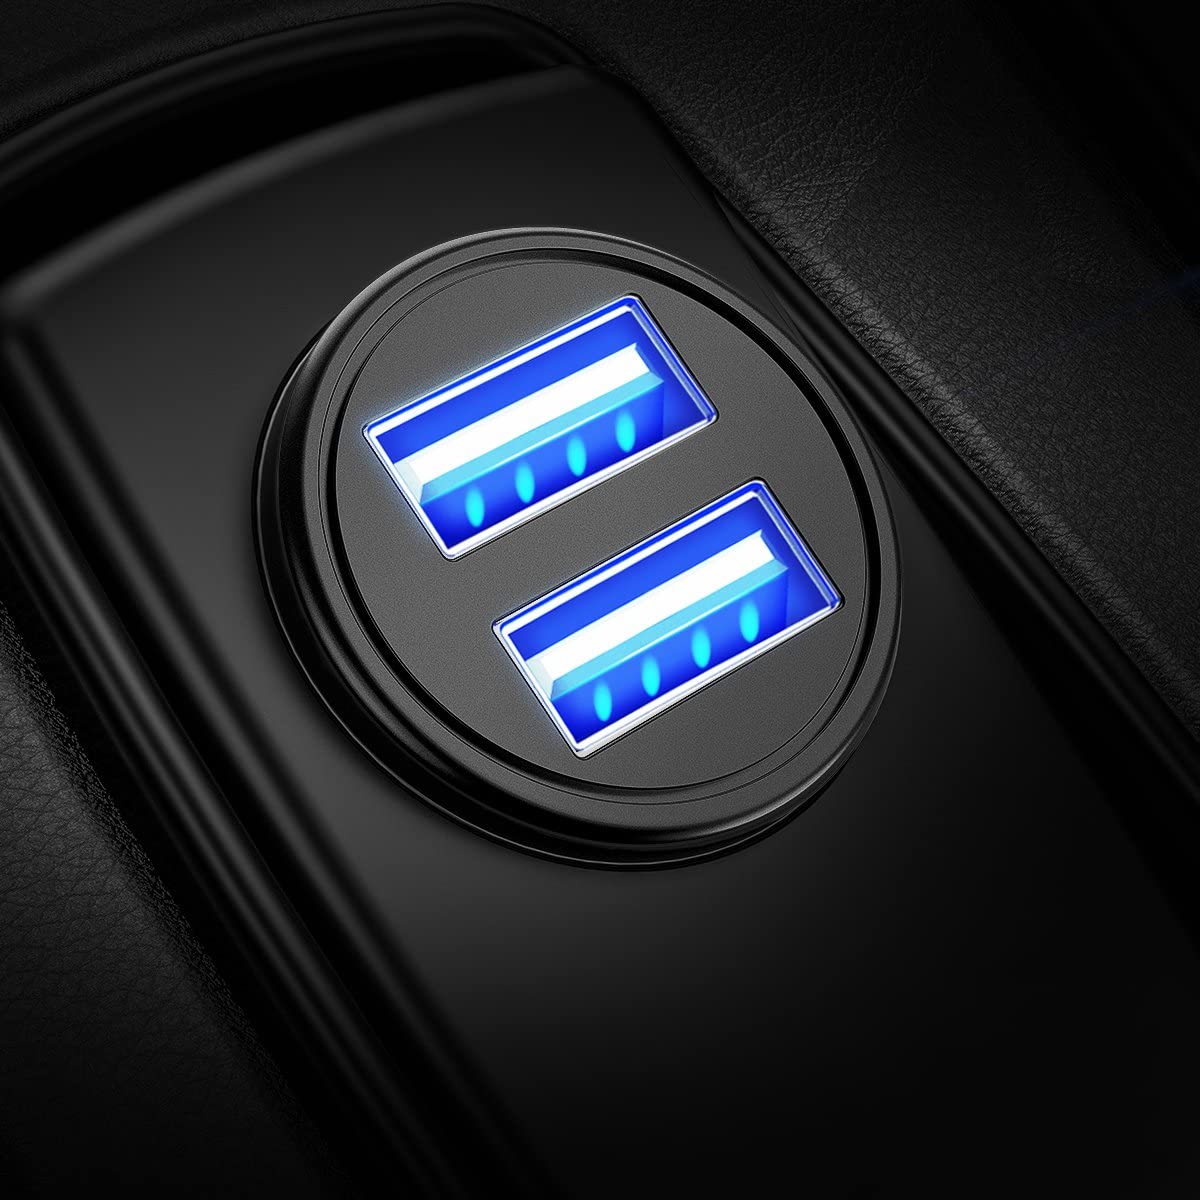 https://www.dontwasteyourmoney.com/wp-content/uploads/2021/03/ainope-mini-flush-fit-dual-port-usb-car-charger-car-electronics-accessories.jpg